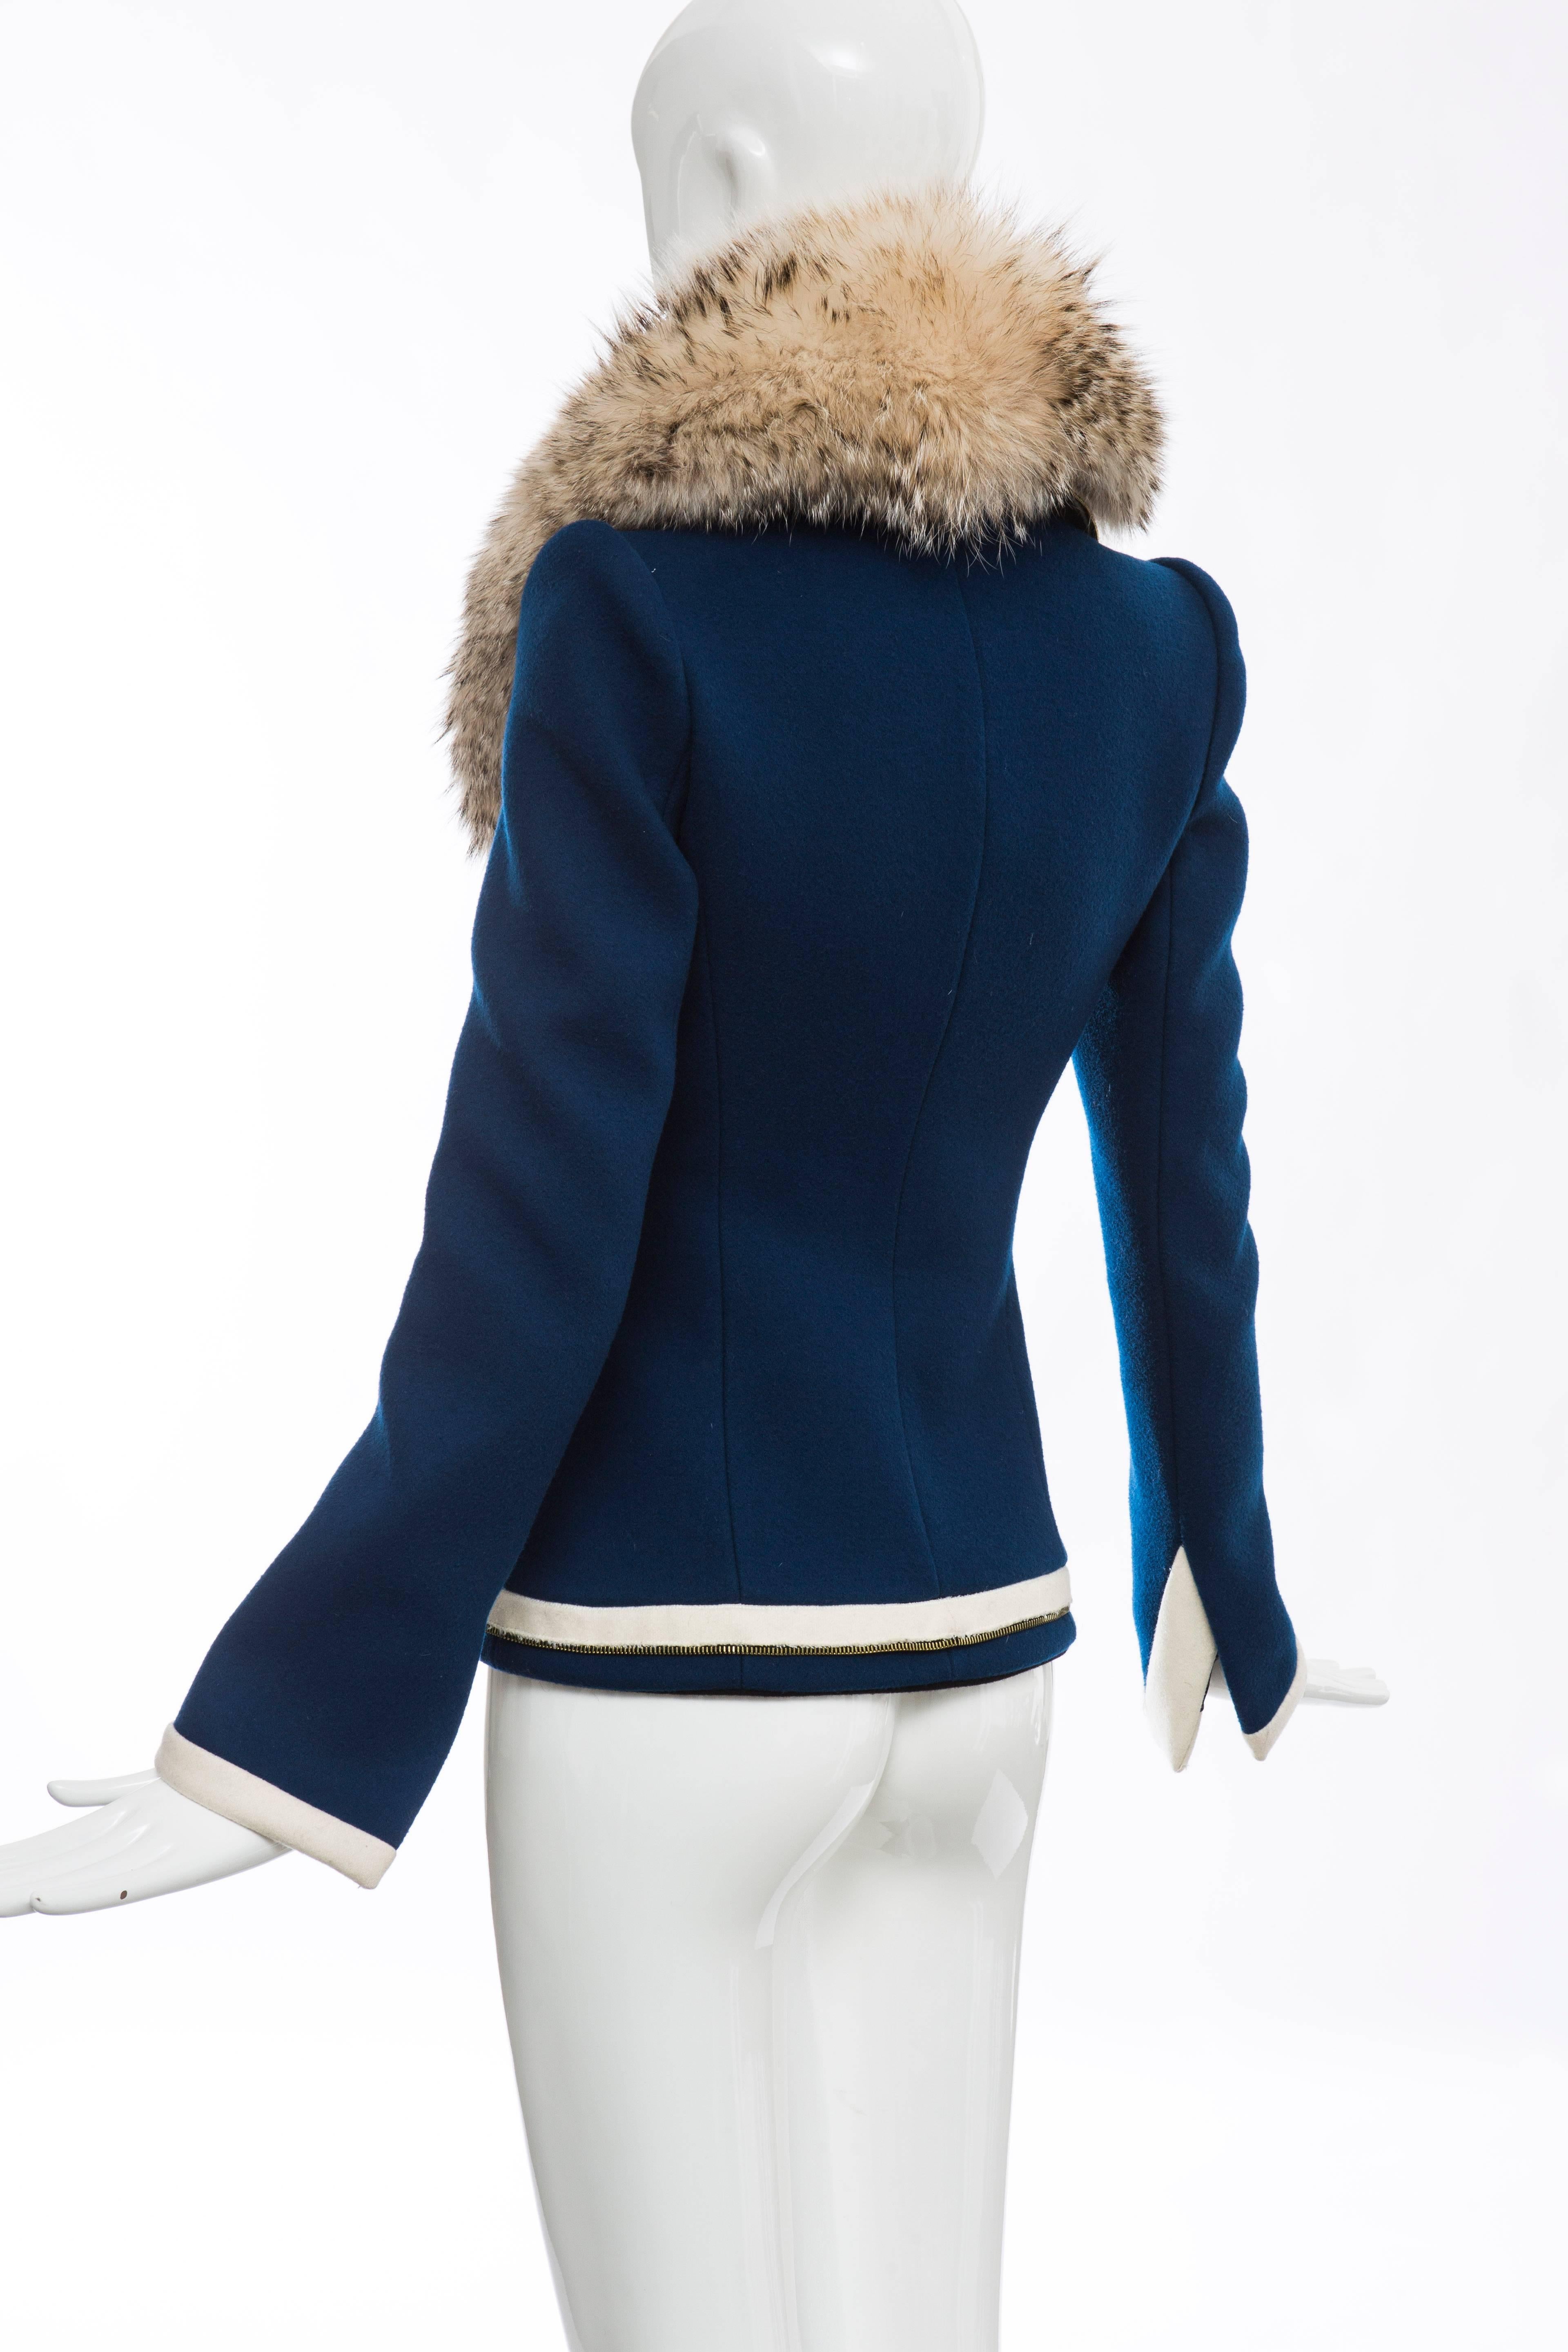 Nicolas Ghesquière For Balenciaga Fur Trim Wool Blazer, Autumn - Winter 2007 1